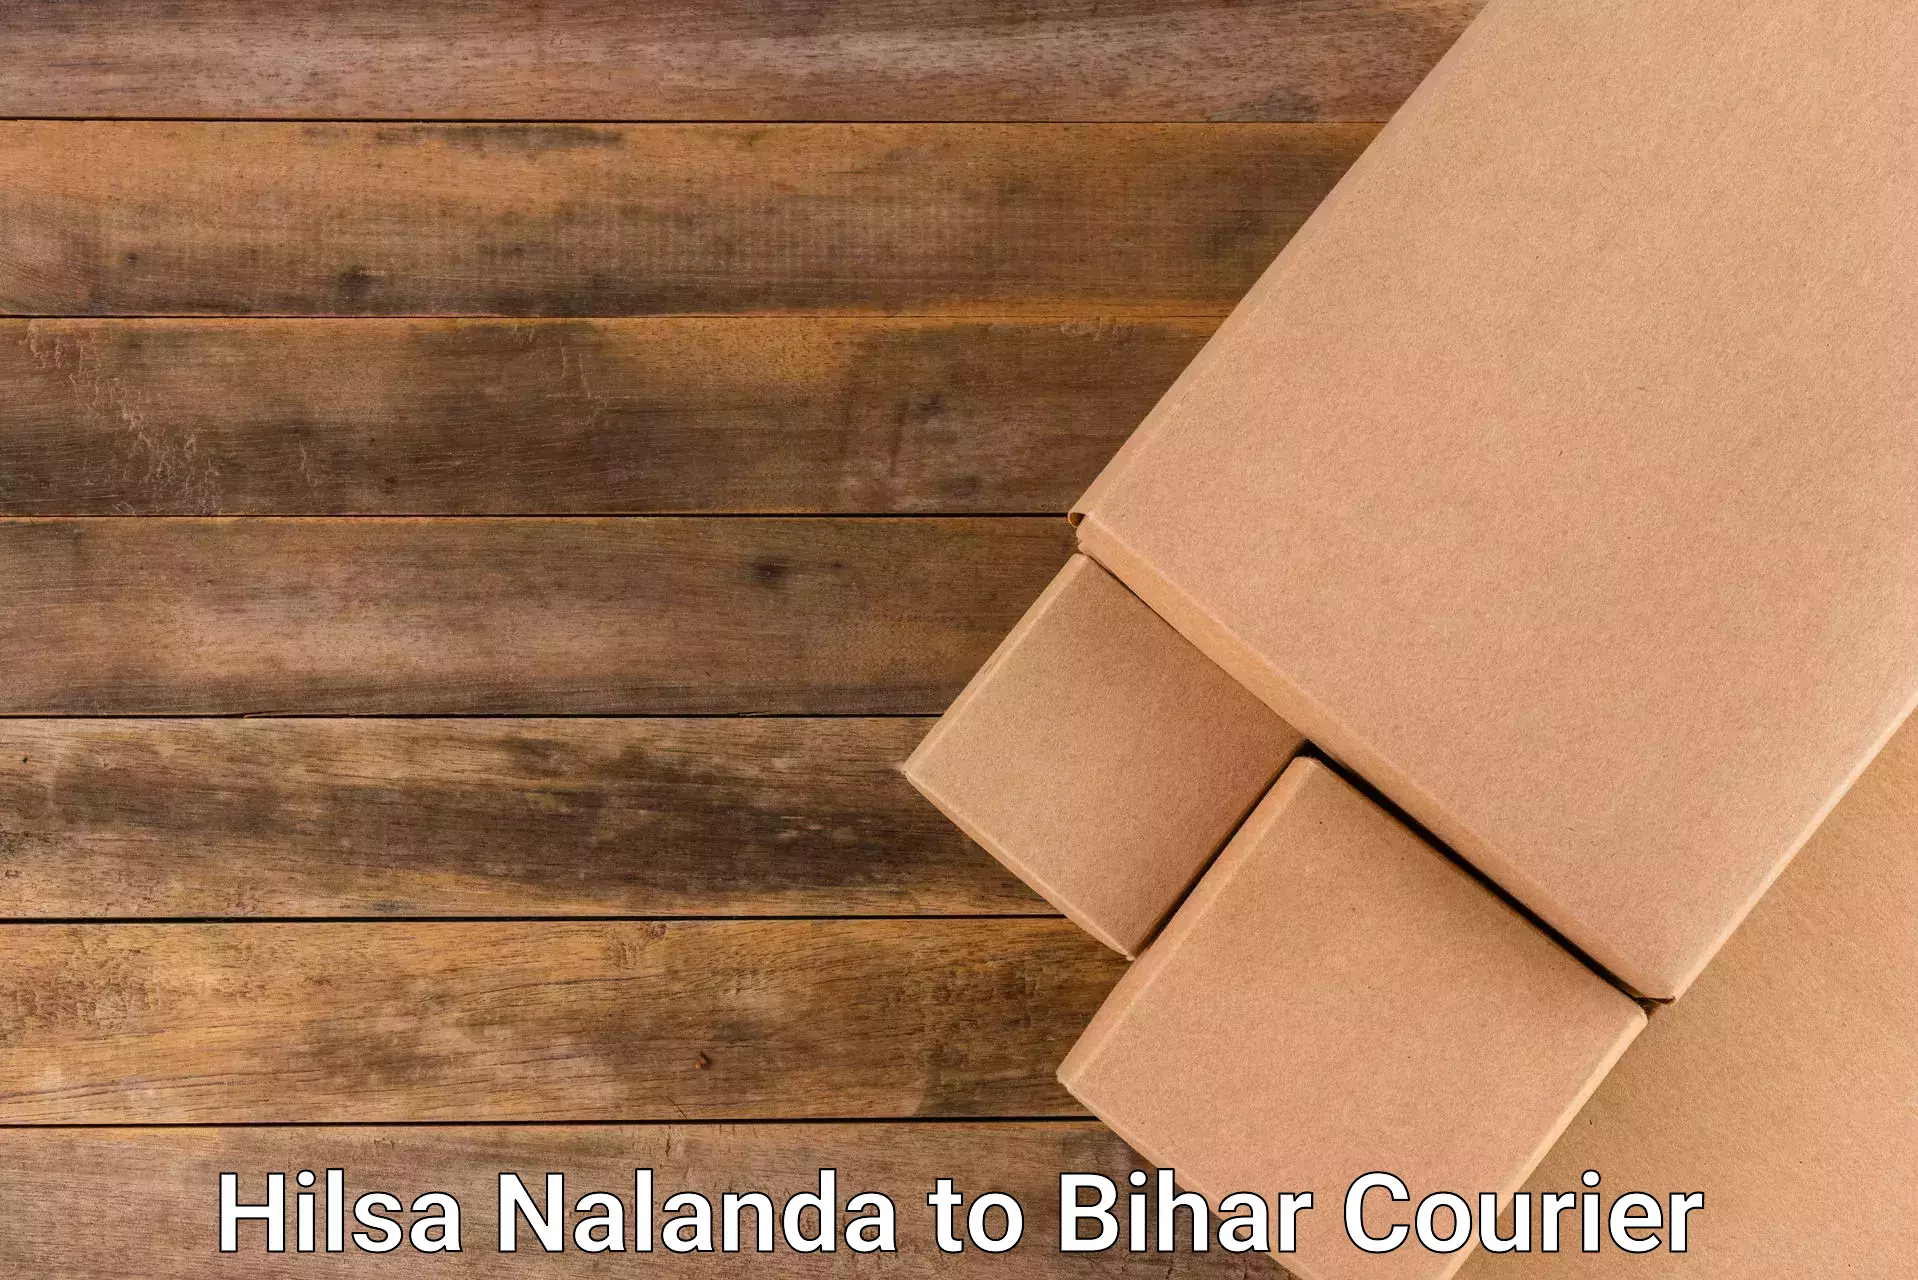 Express package handling Hilsa Nalanda to Rajpur